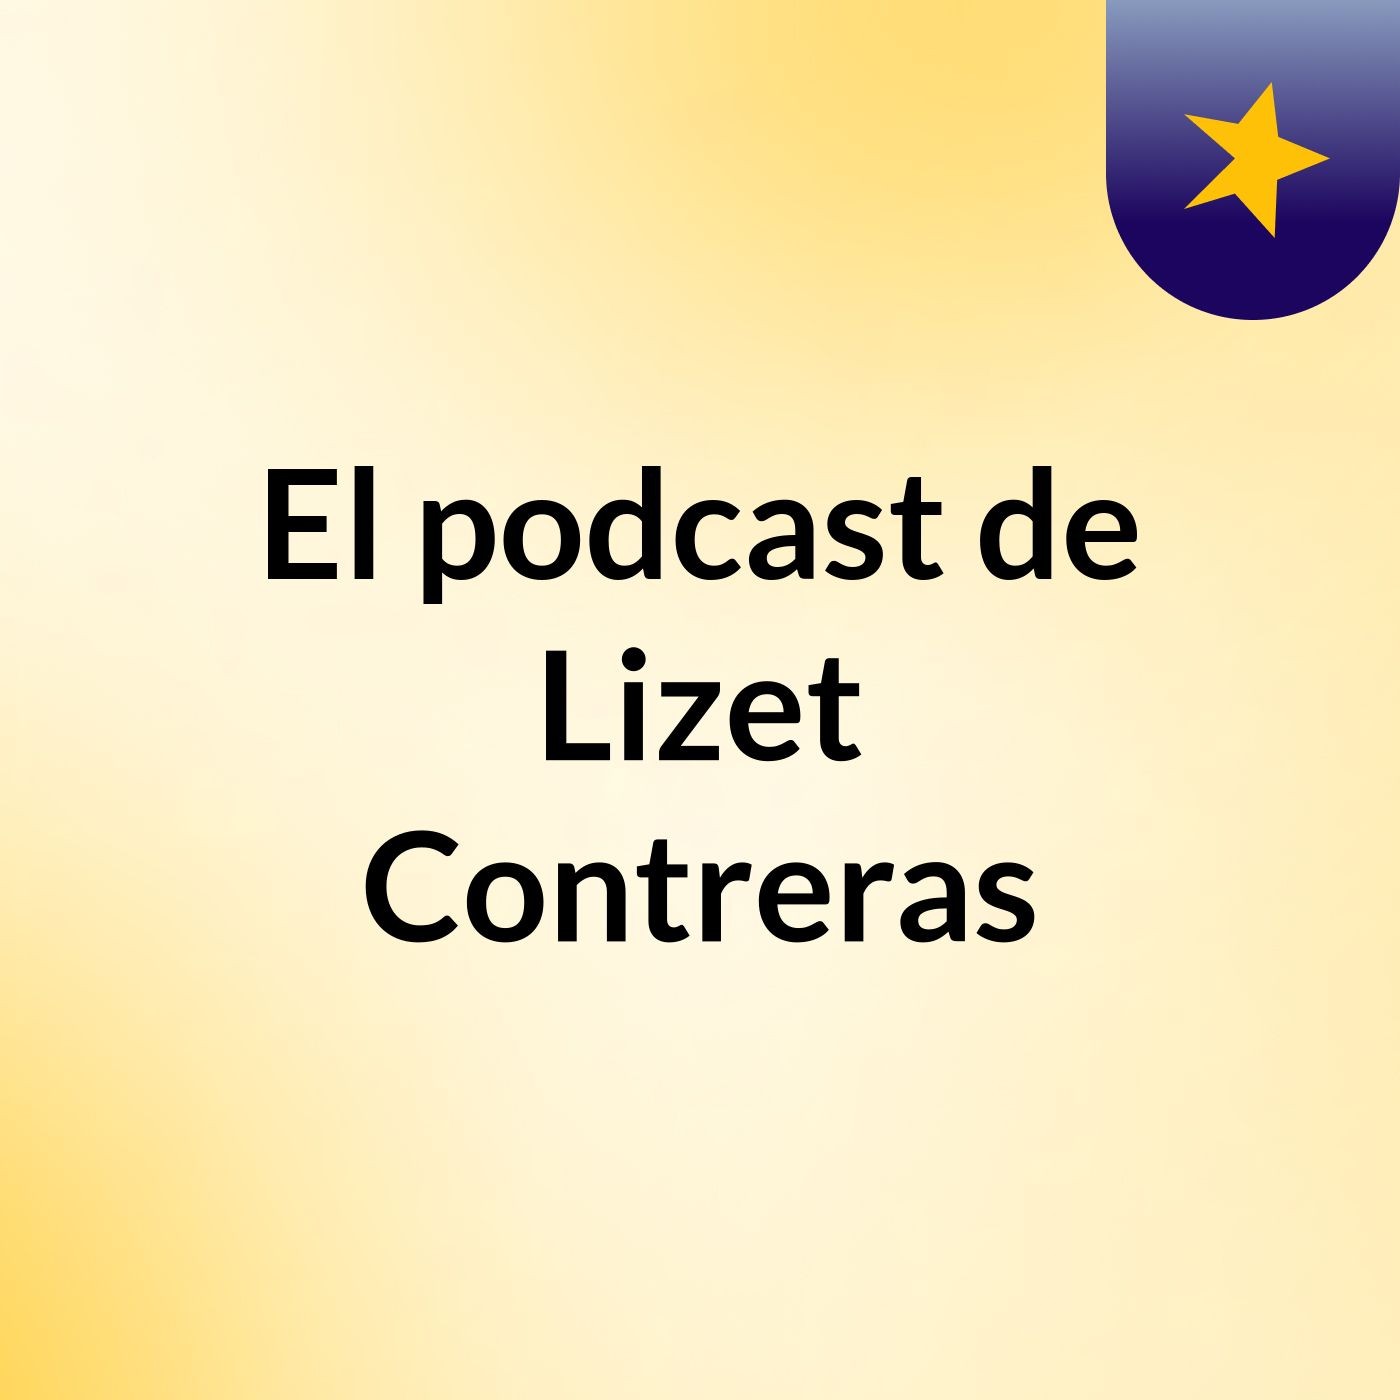 - El podcast de Lizet Contreras